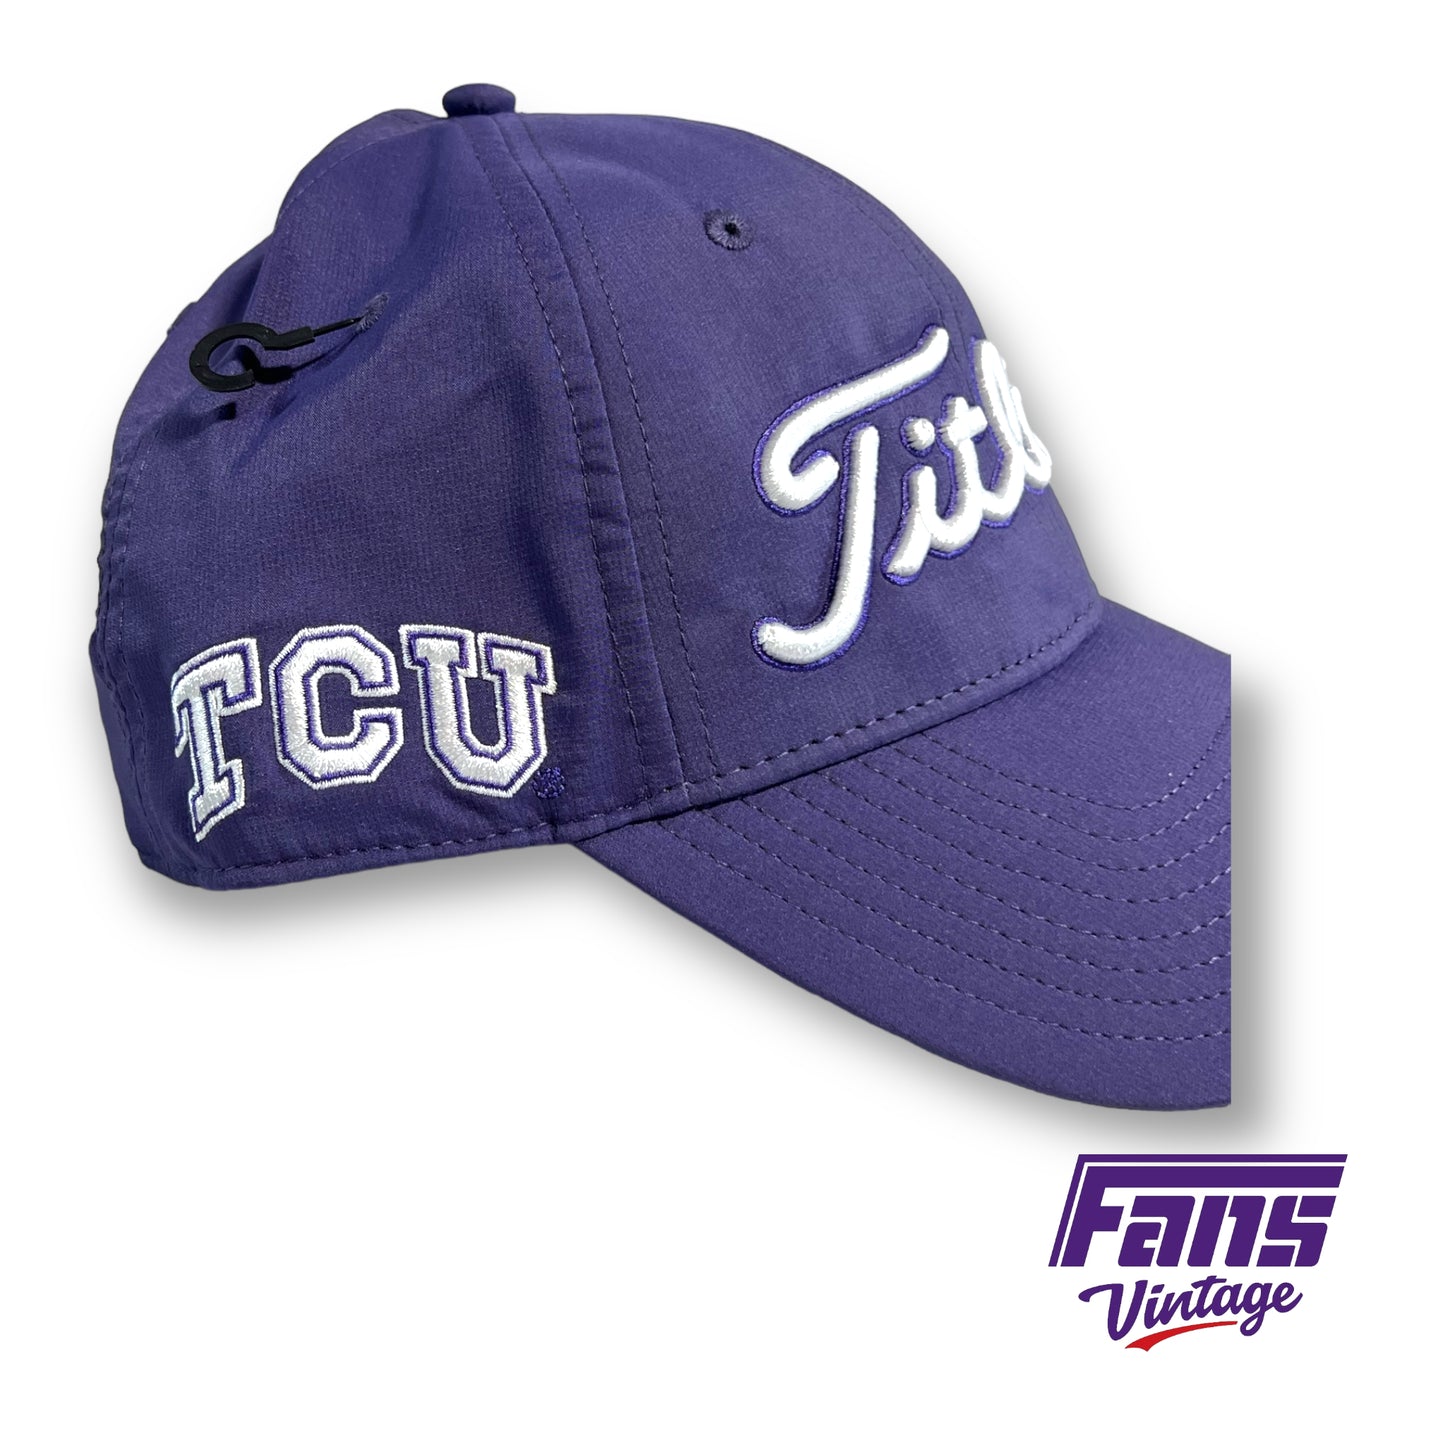 Titleist TCU Golf snapback hat